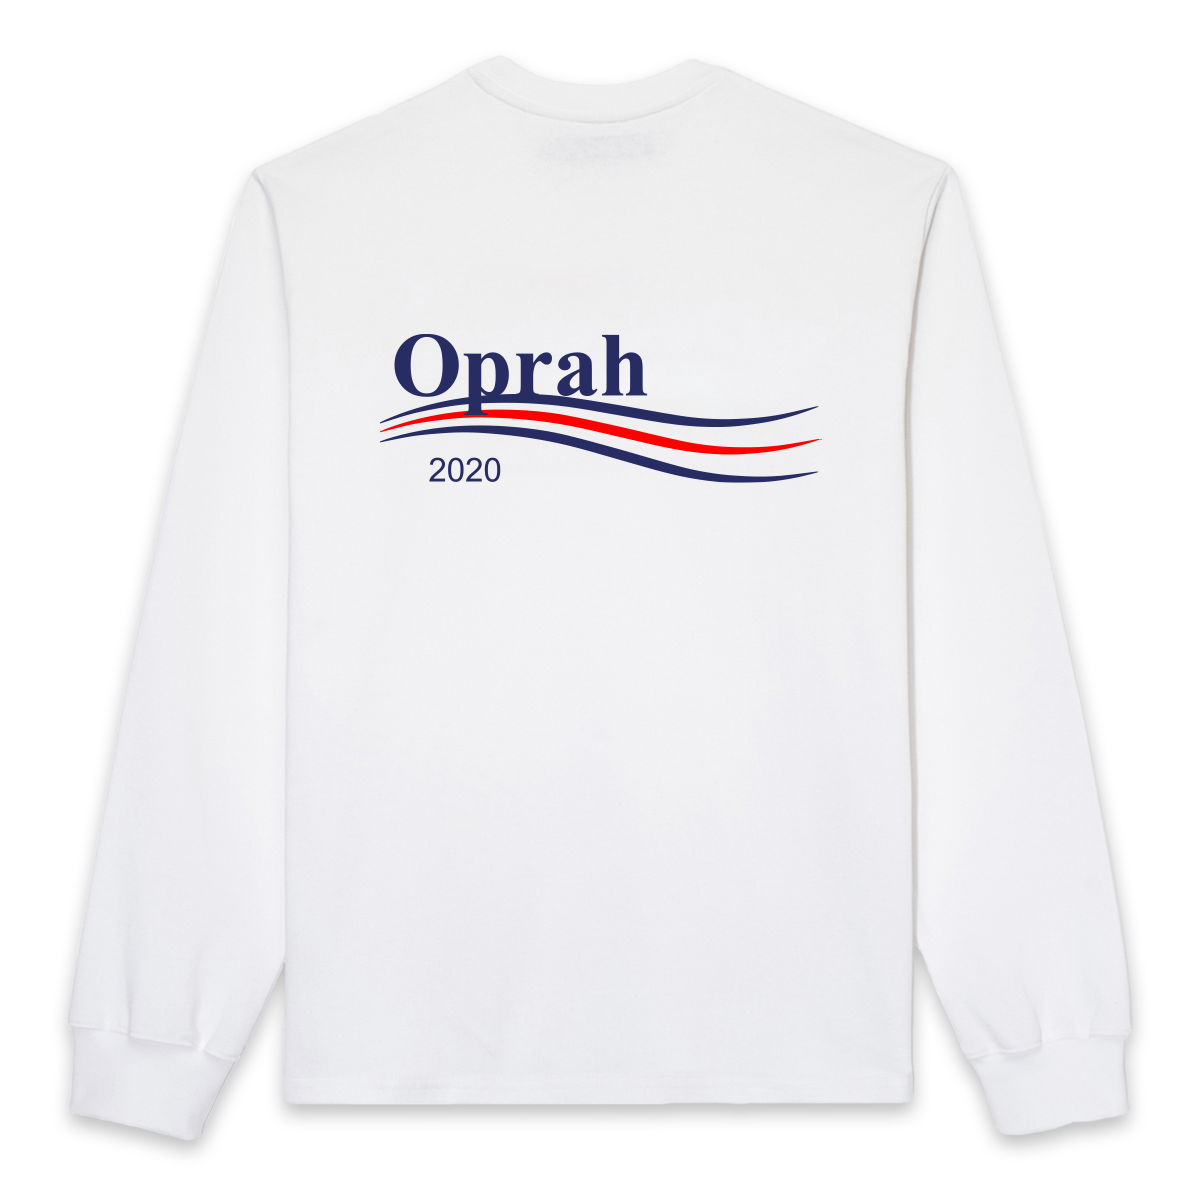 OPRAH 2020 L/S T-SHIRT